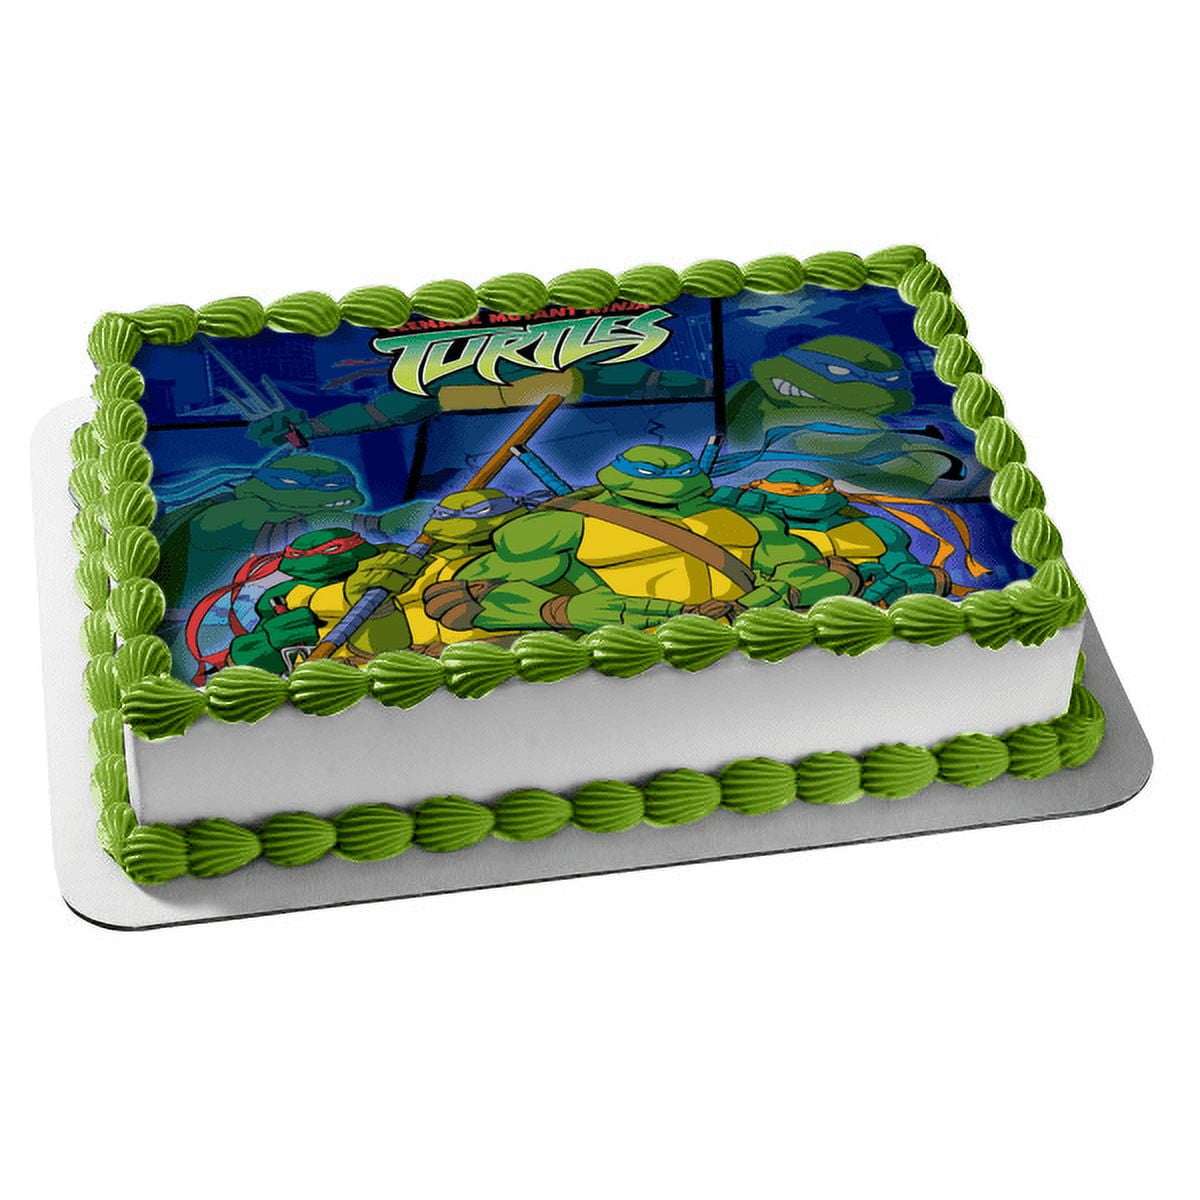 Teenage Mutant Ninja Turtles Edible Cake Toppers Edible Image Cake Top